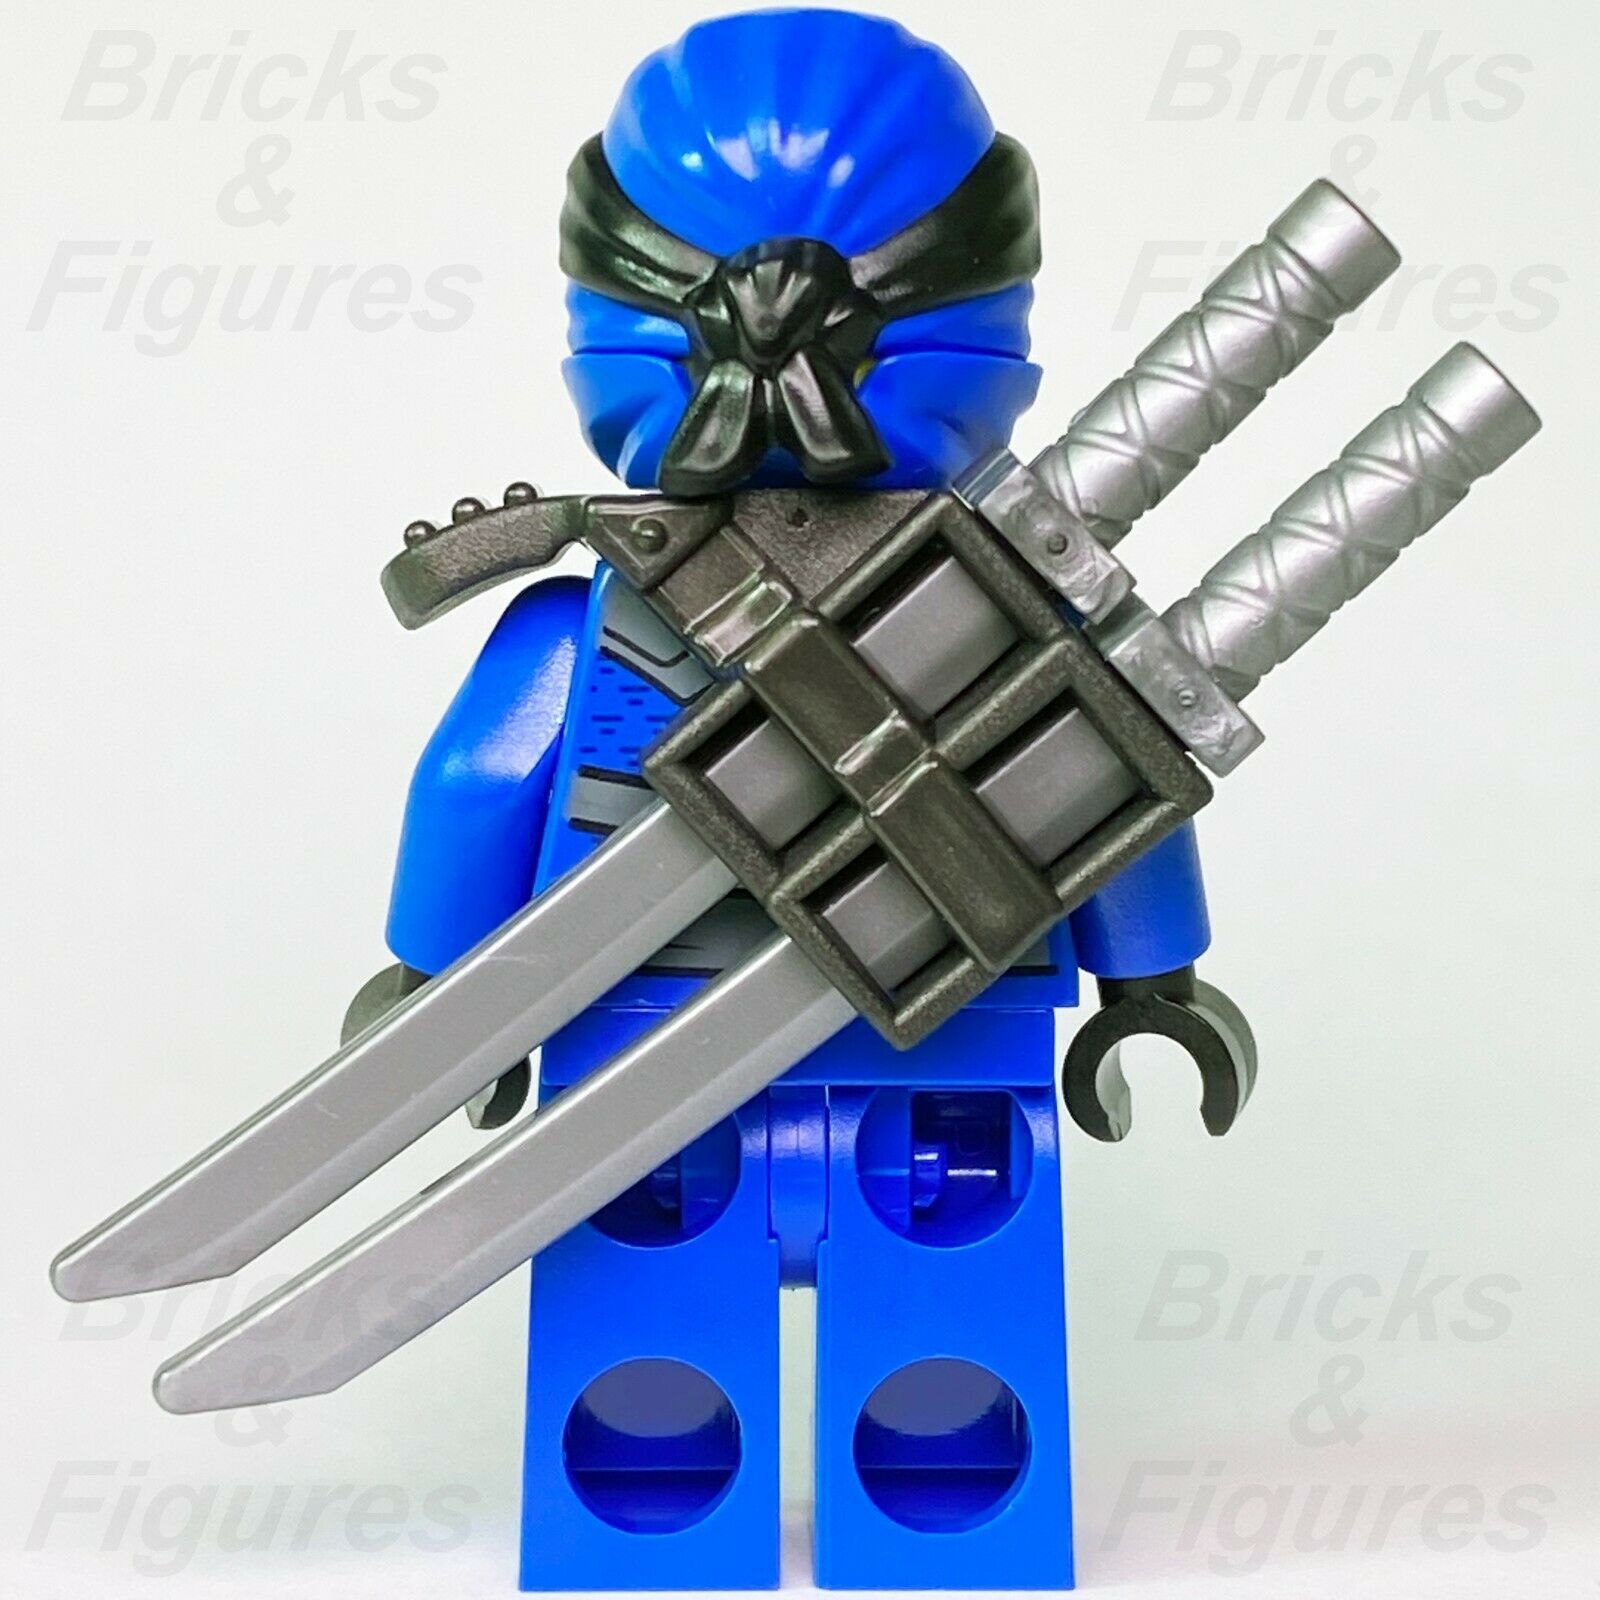 New Ninjago LEGO Jay Sons of Garmadon Blue Ninja Minifigure 70642 njo389 - Bricks & Figures